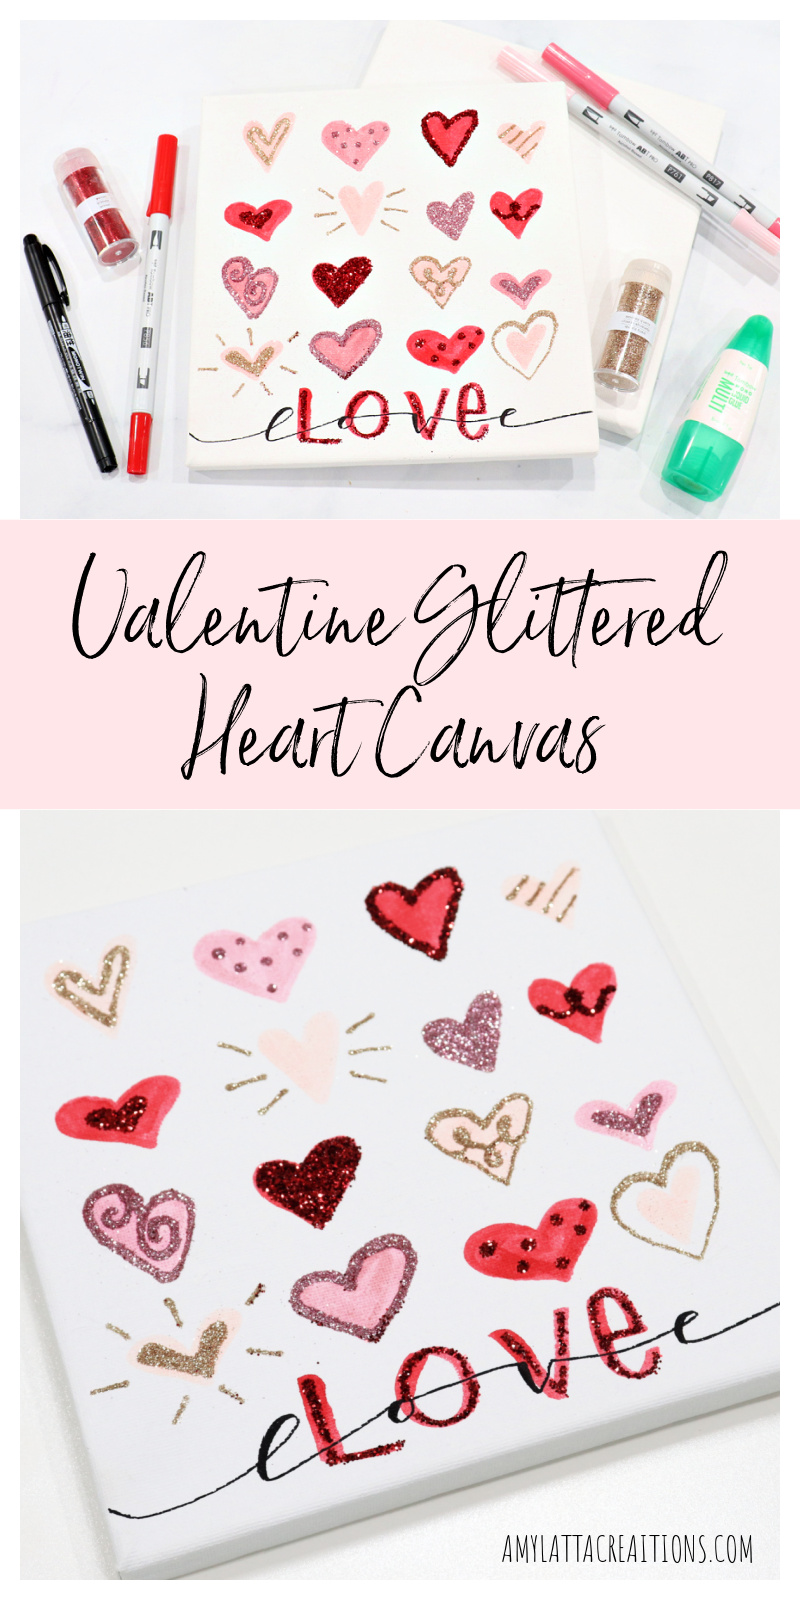 Valentine Glittered Heart Canvas